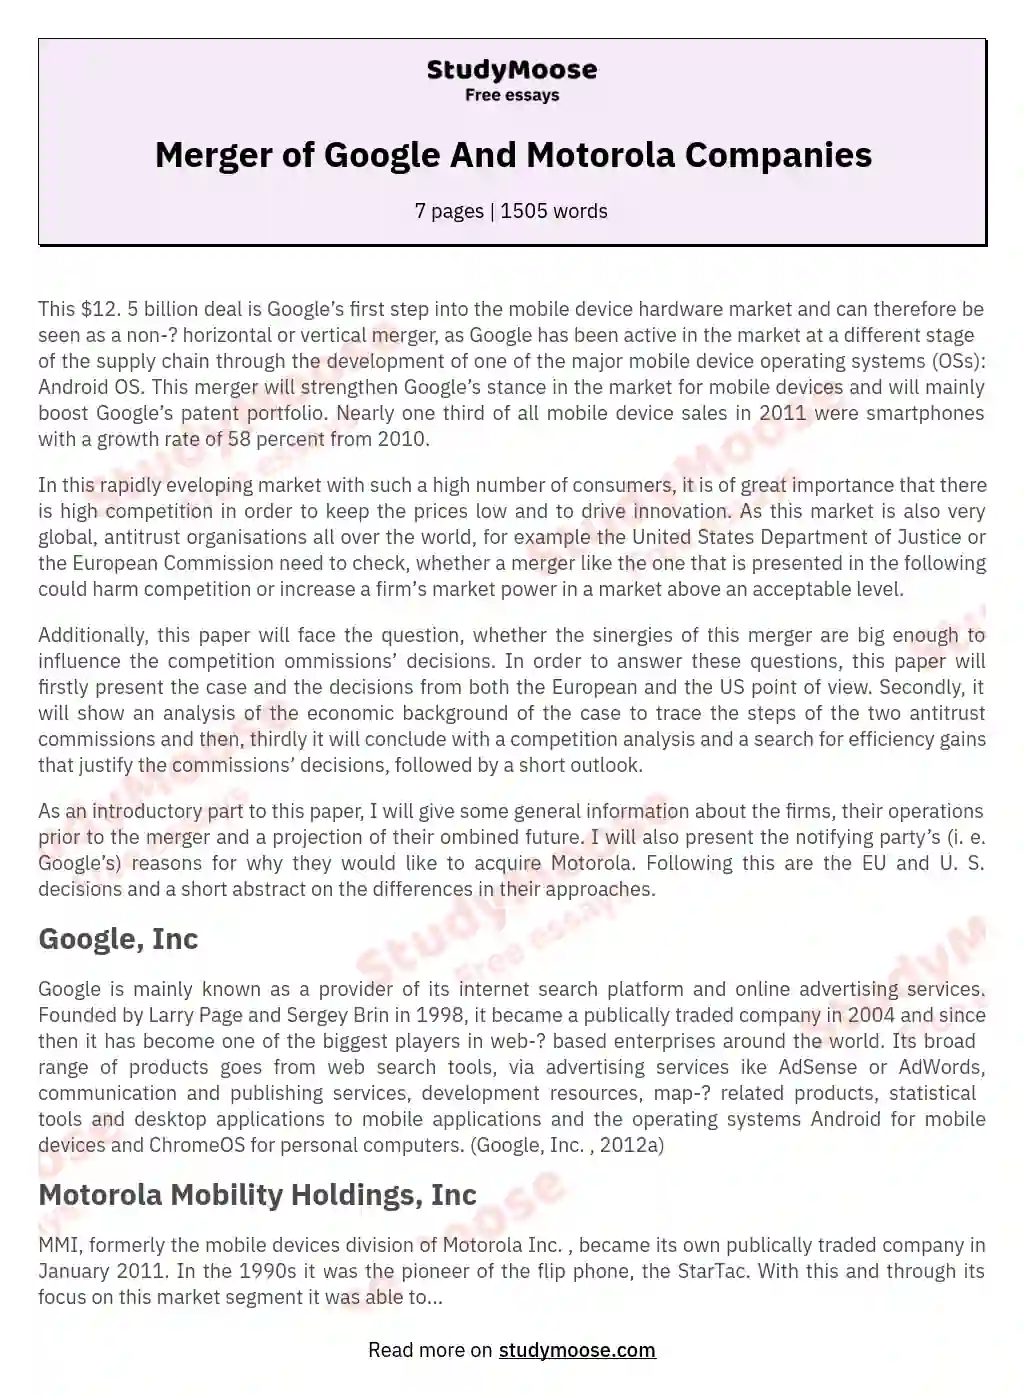 Merger of Google And Motorola Companies essay